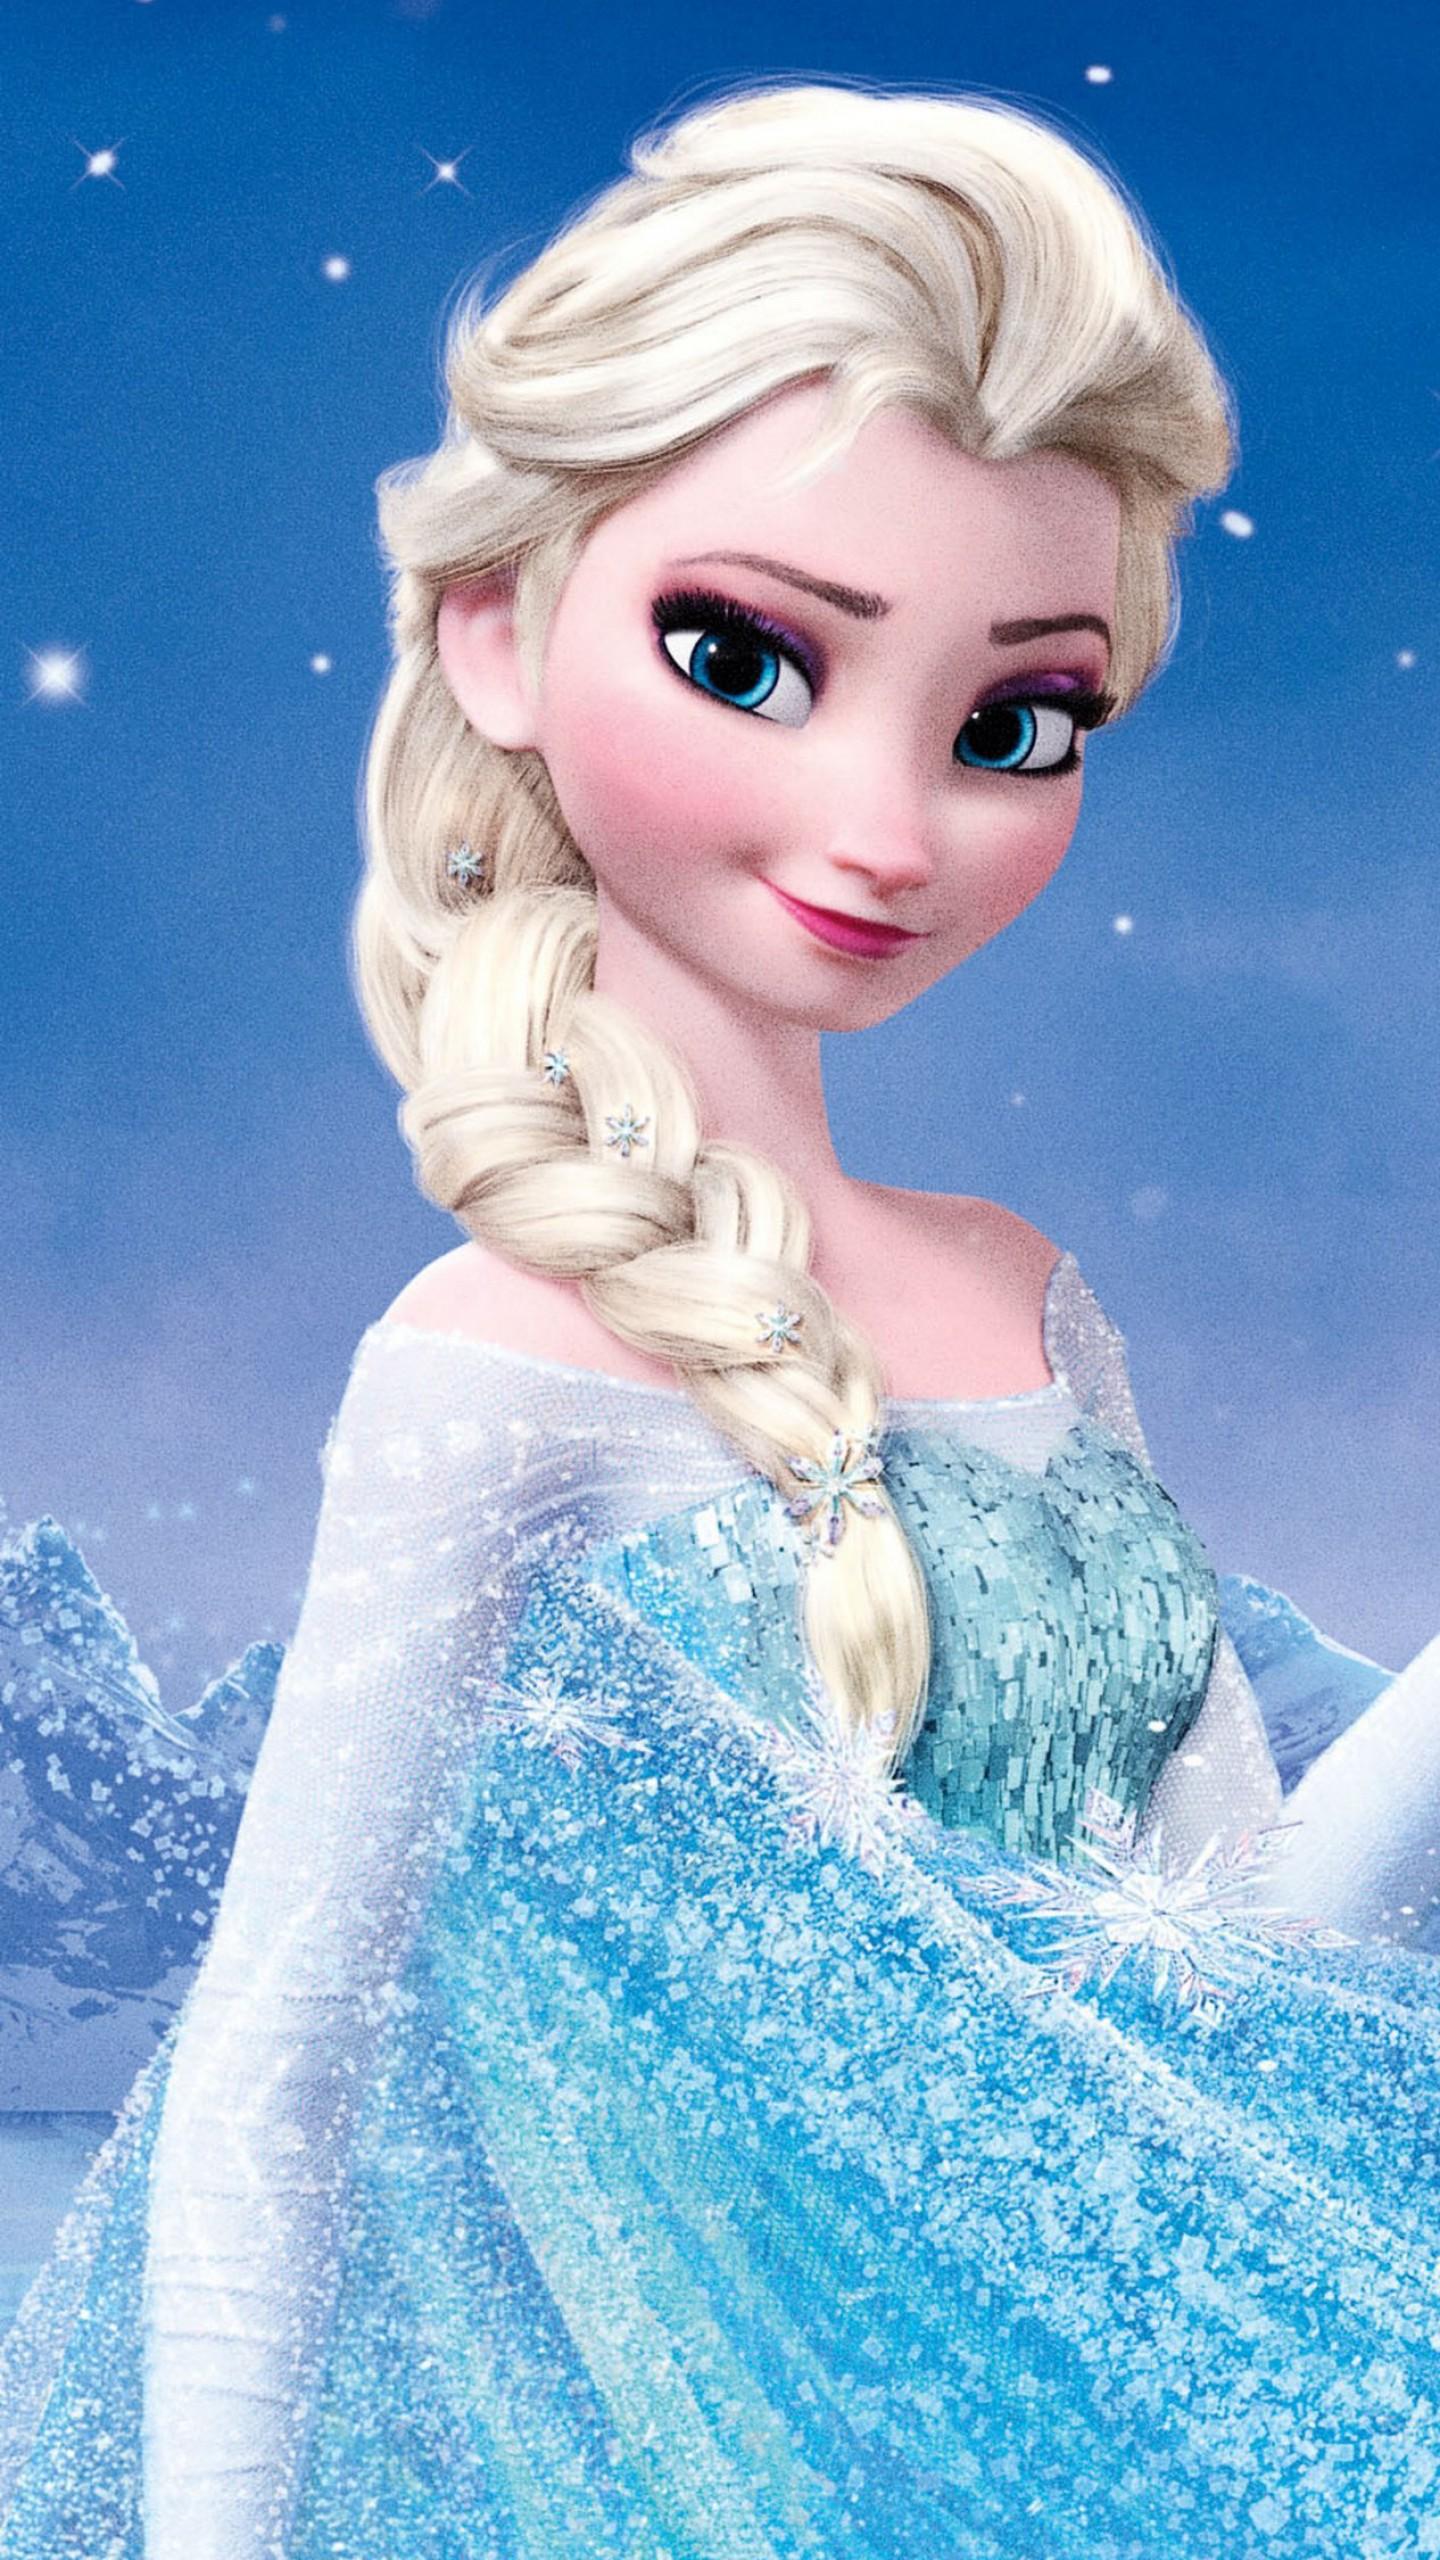 Wallpaper Frozen, Queen Elsa, HD, 4K, Movies,. Wallpaper